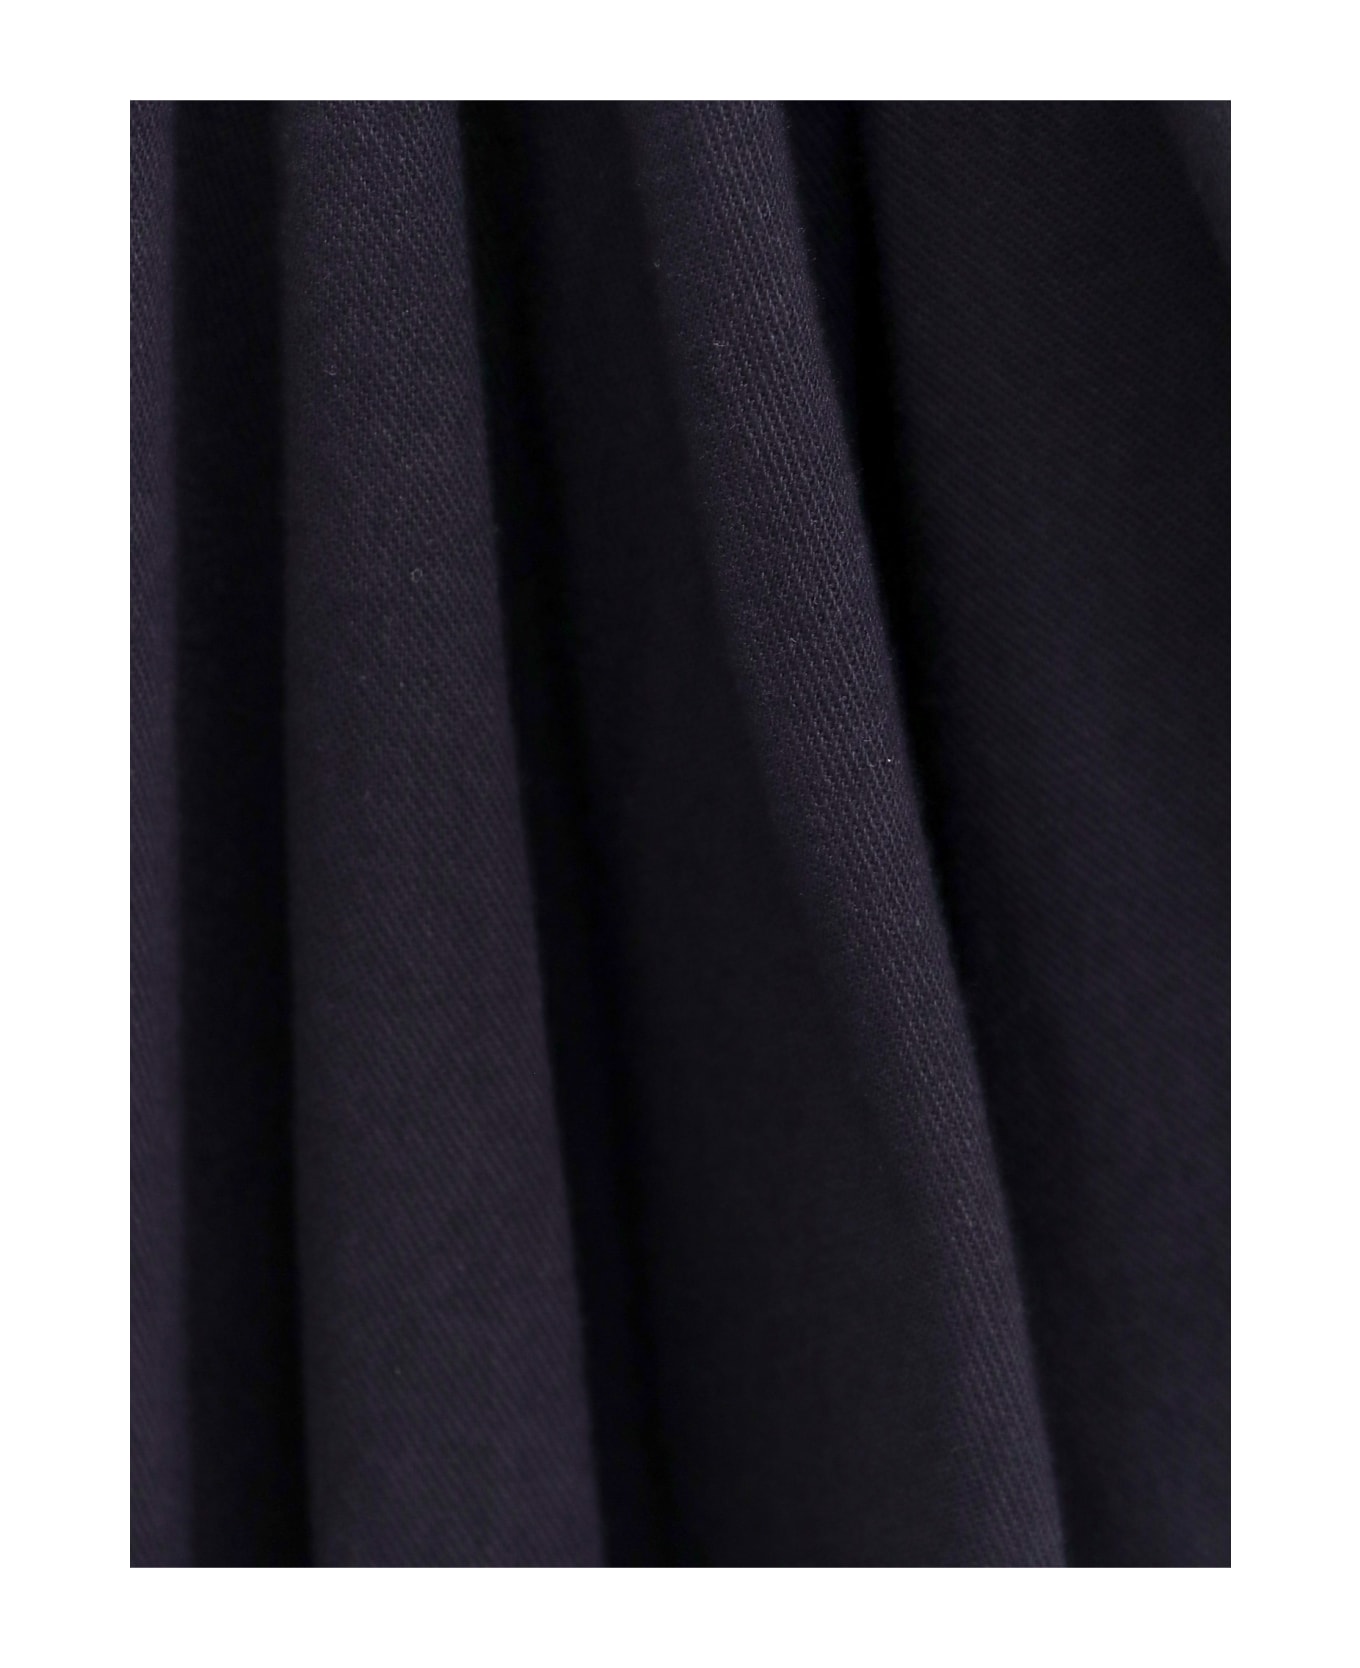 Lemaire Dress - BLACK ワンピース＆ドレス